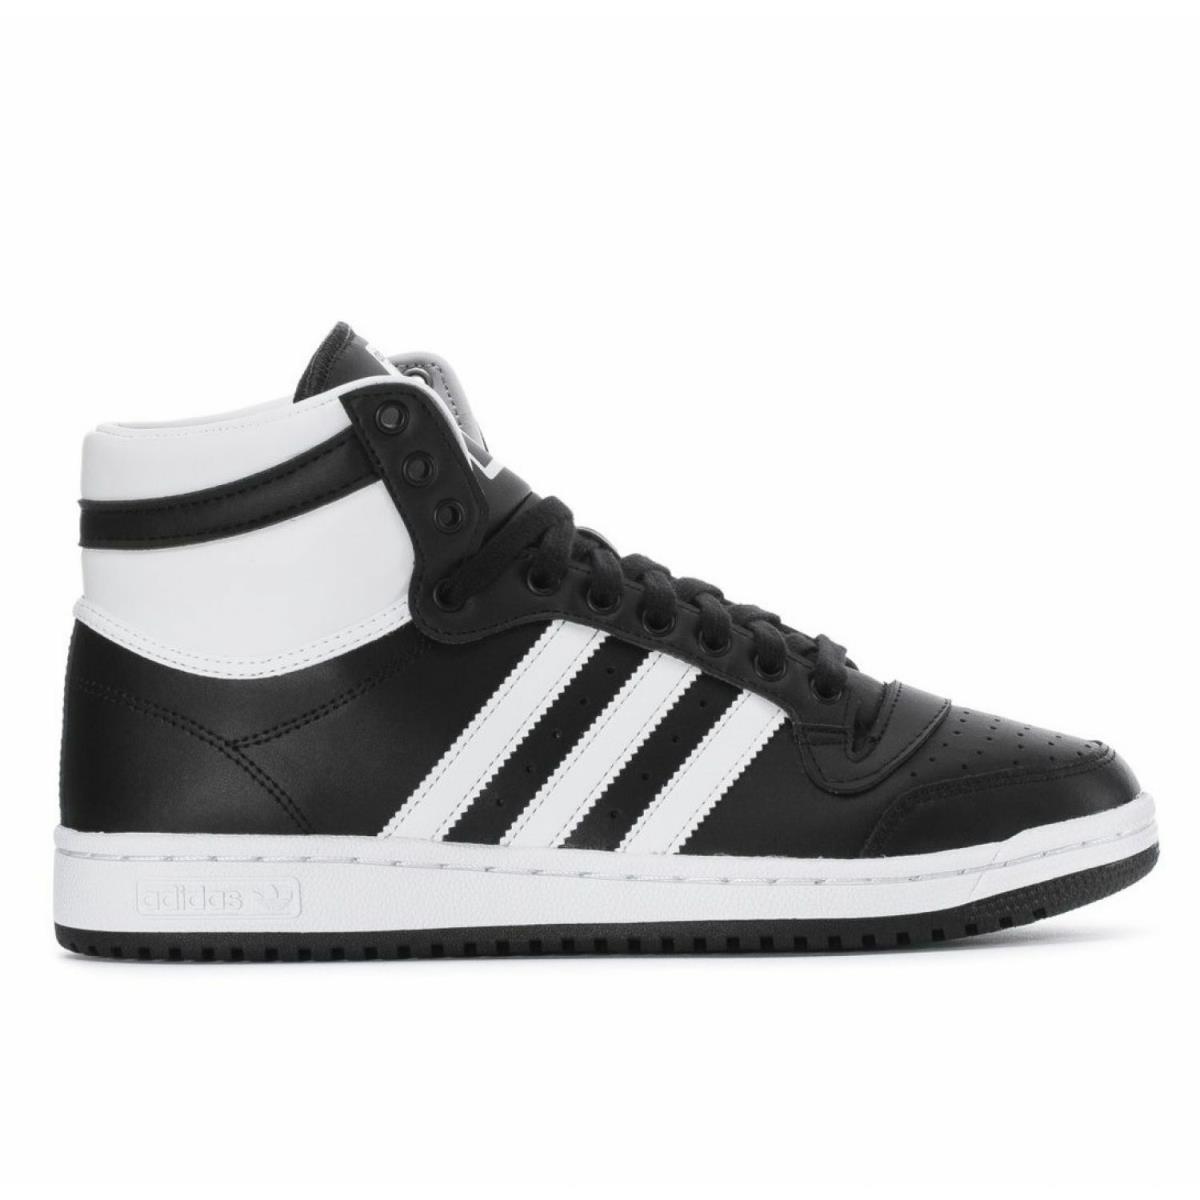 Adidas Top Ten Hi Mens FV6132 Black White Leather Athletic Shoes Size 8